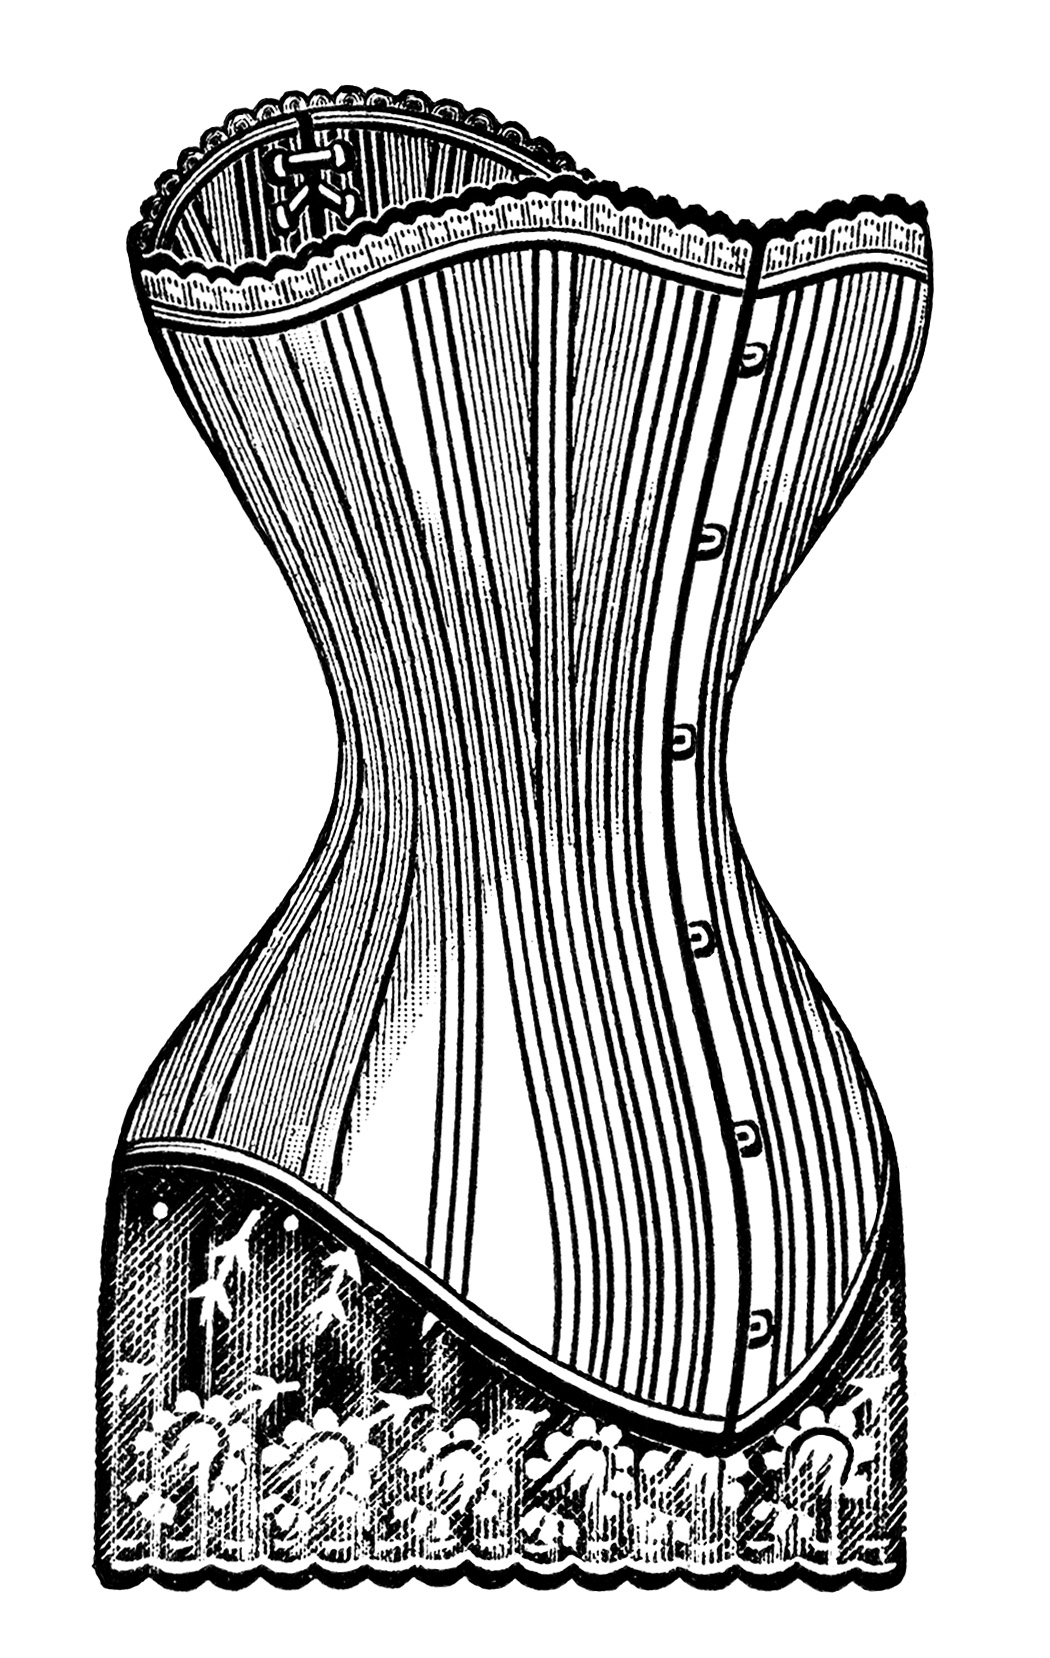 Victorian corset clip art, black and white graphics, steampunk corset image, Edwardian fashion illustration, vintage corset